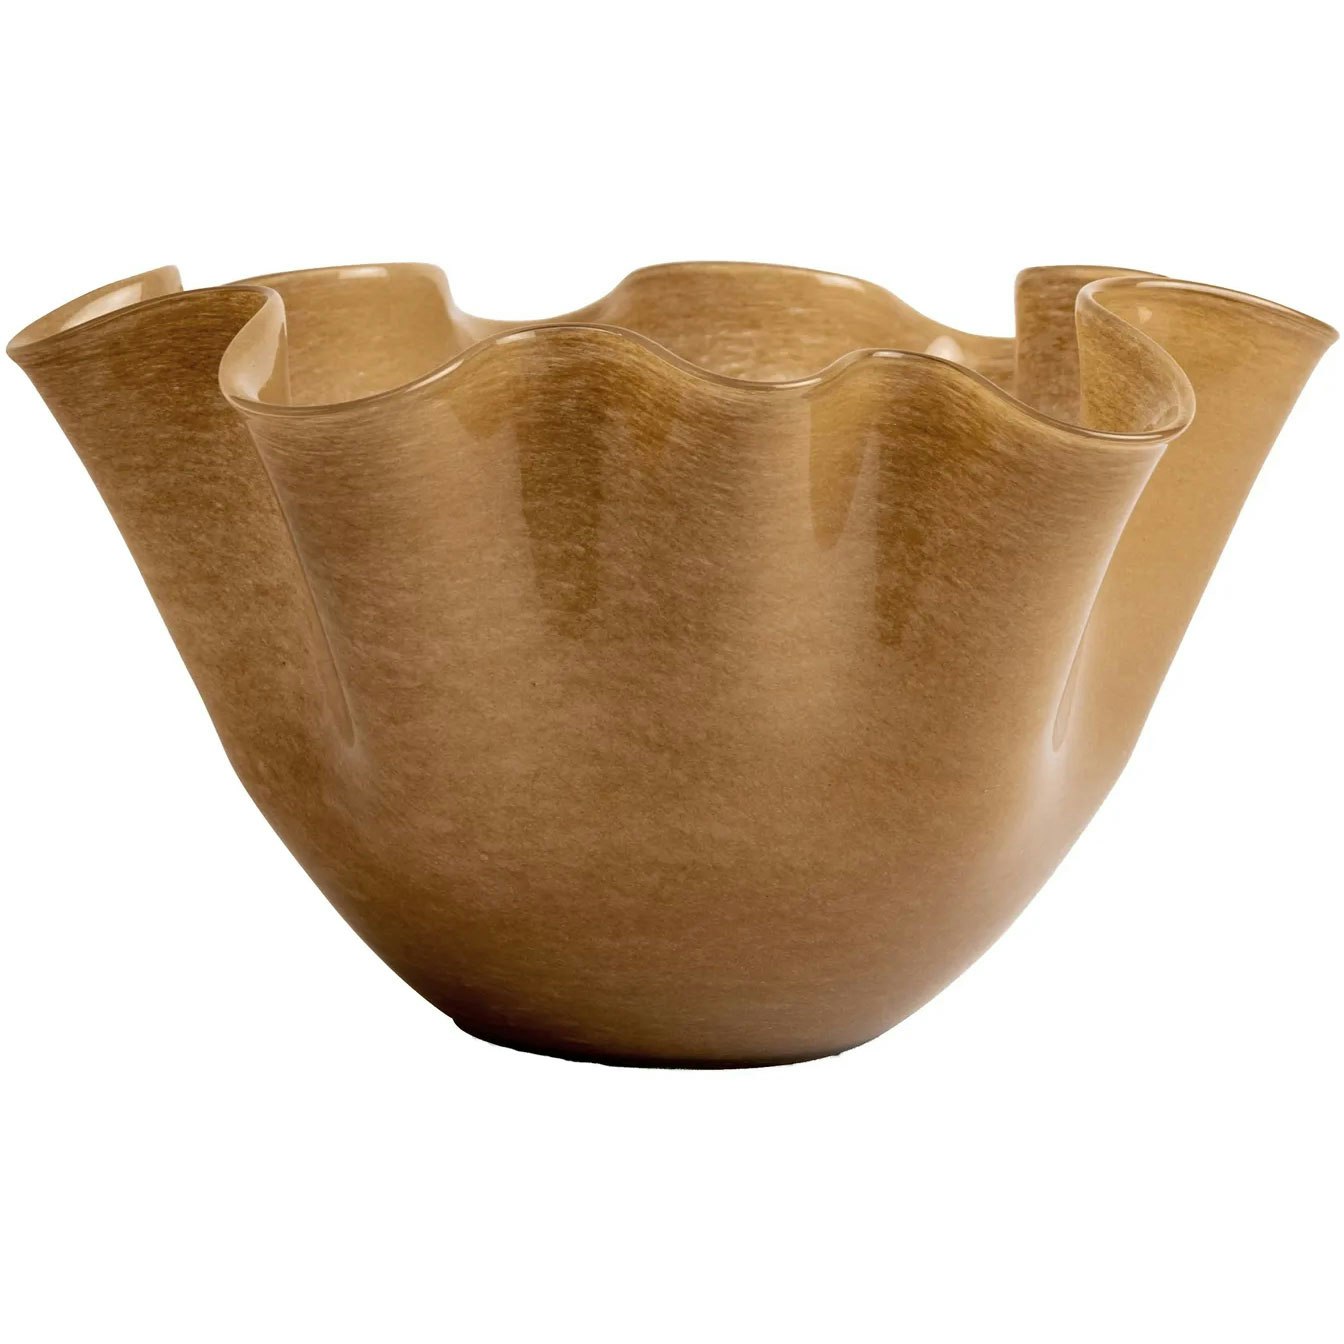 https://royaldesign.com/image/2/byon-cara-bowl-l-beige-0